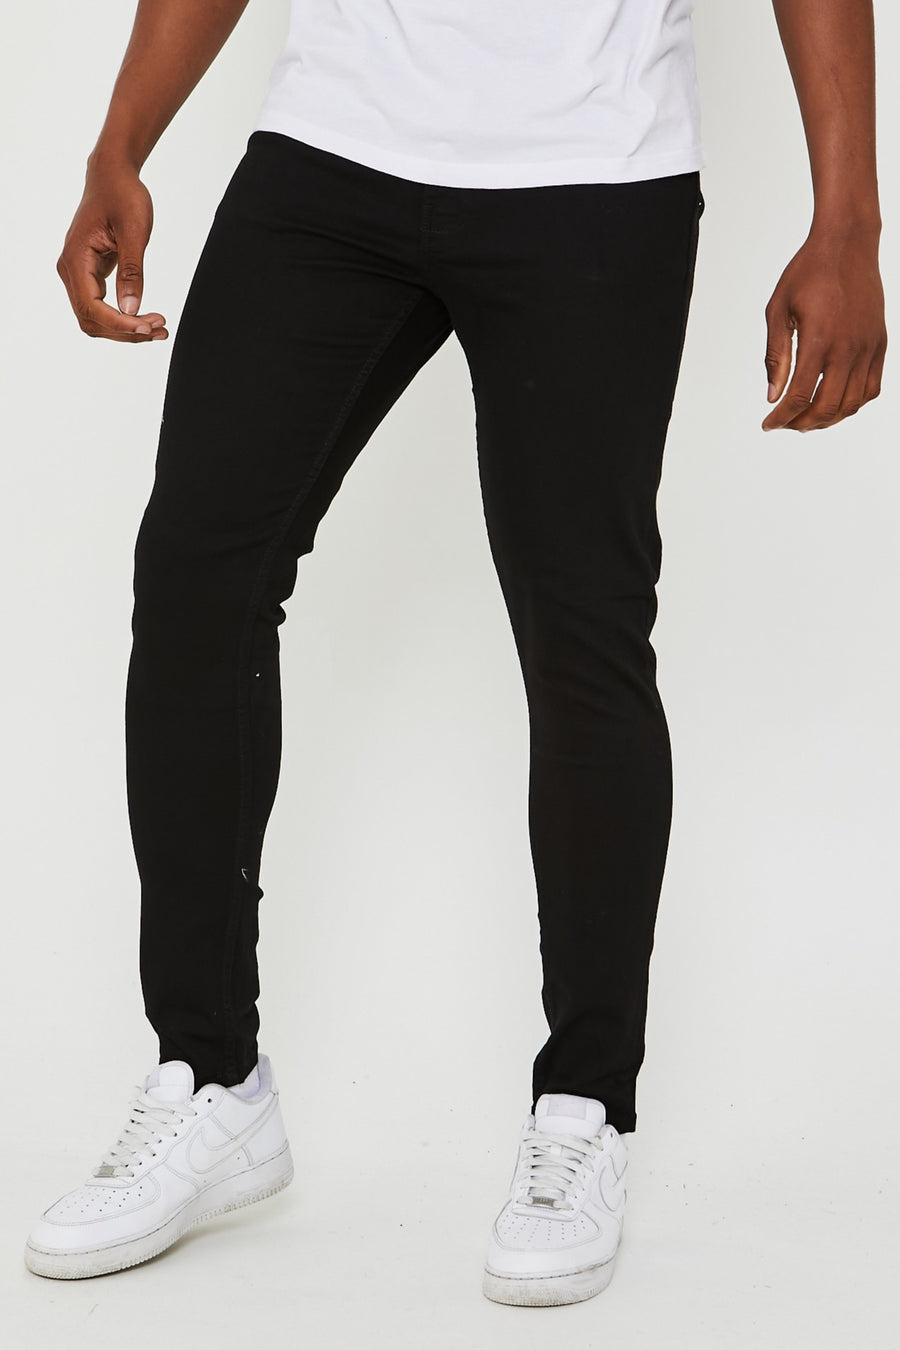 Just Organic Skinny Jeans - Black